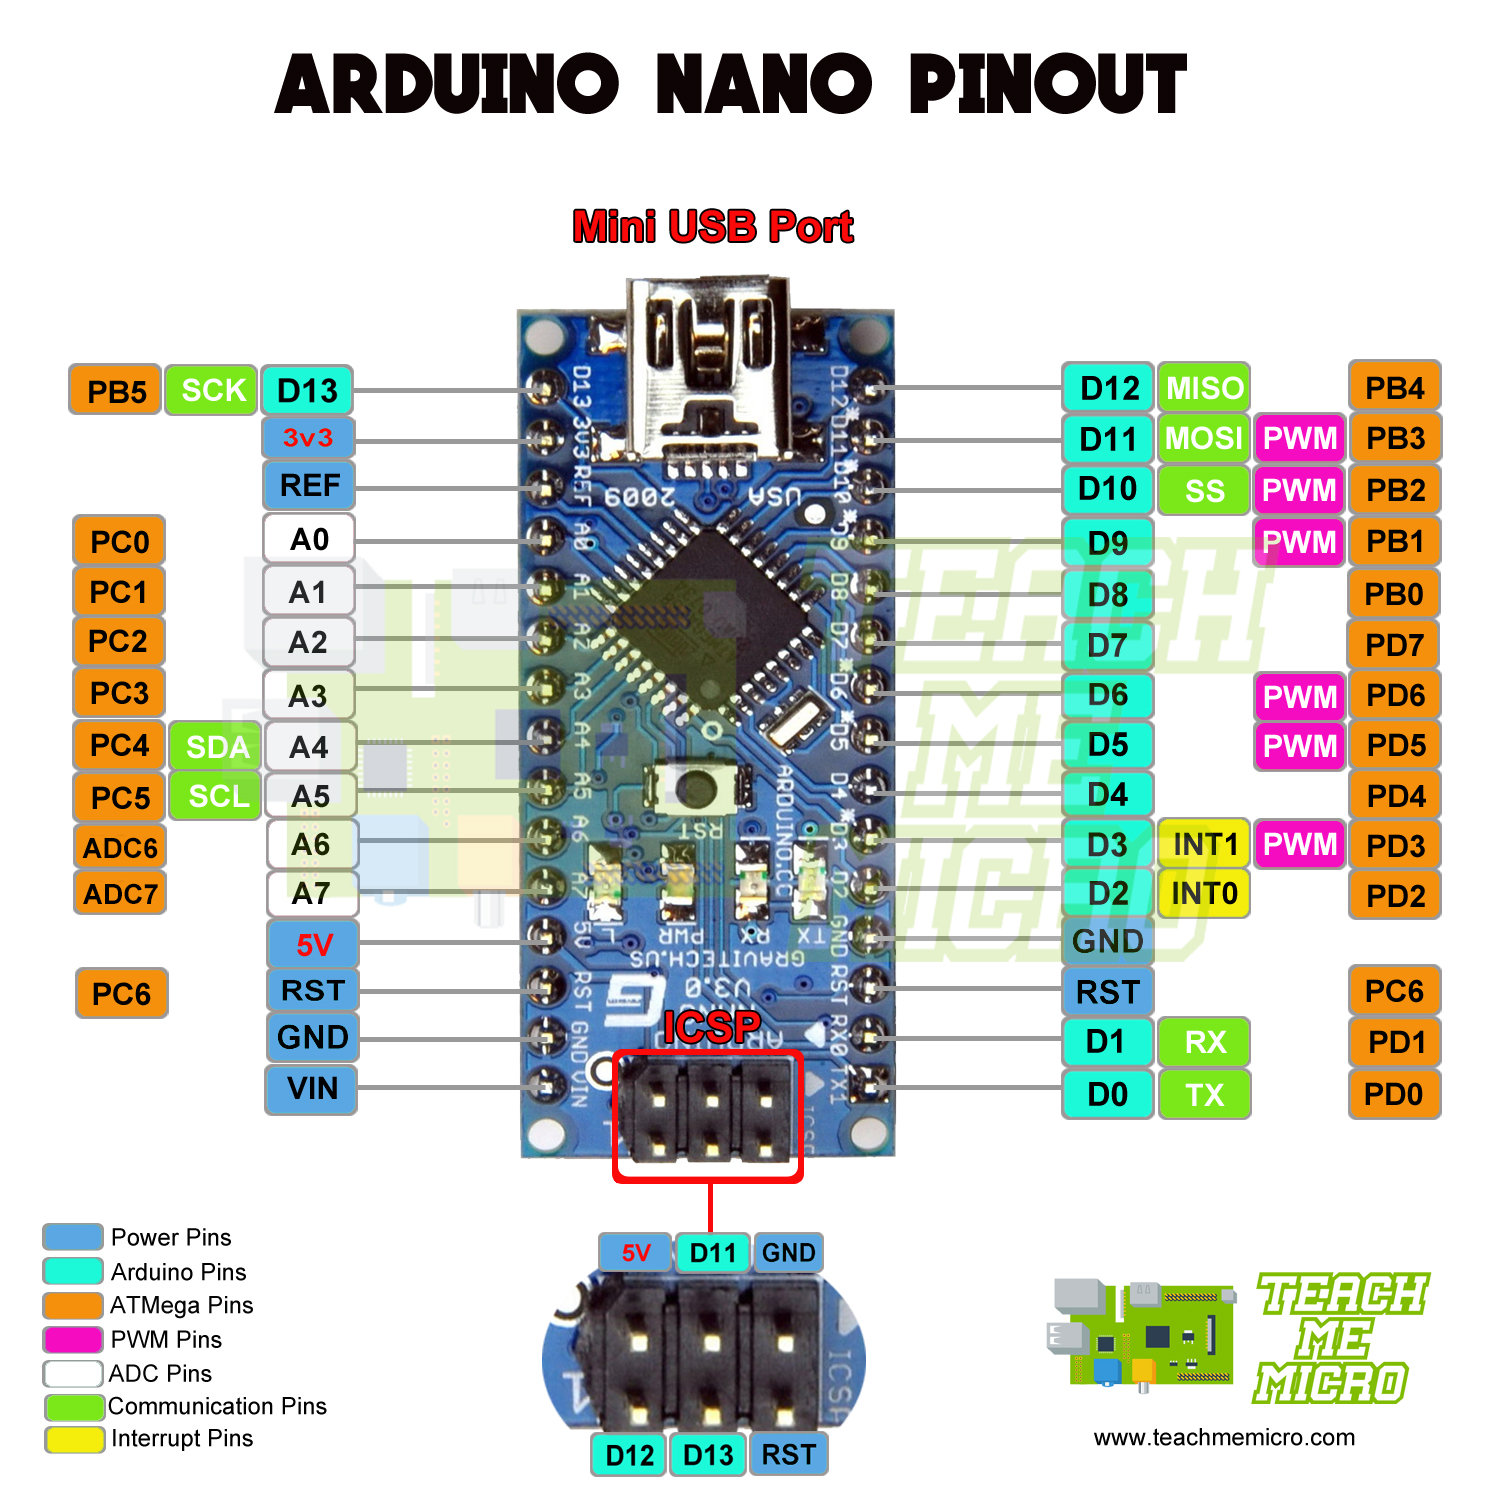 Foresee I wash my clothes Children Center Arduino NANO Pinout Diagram | Microcontroller Tutorials